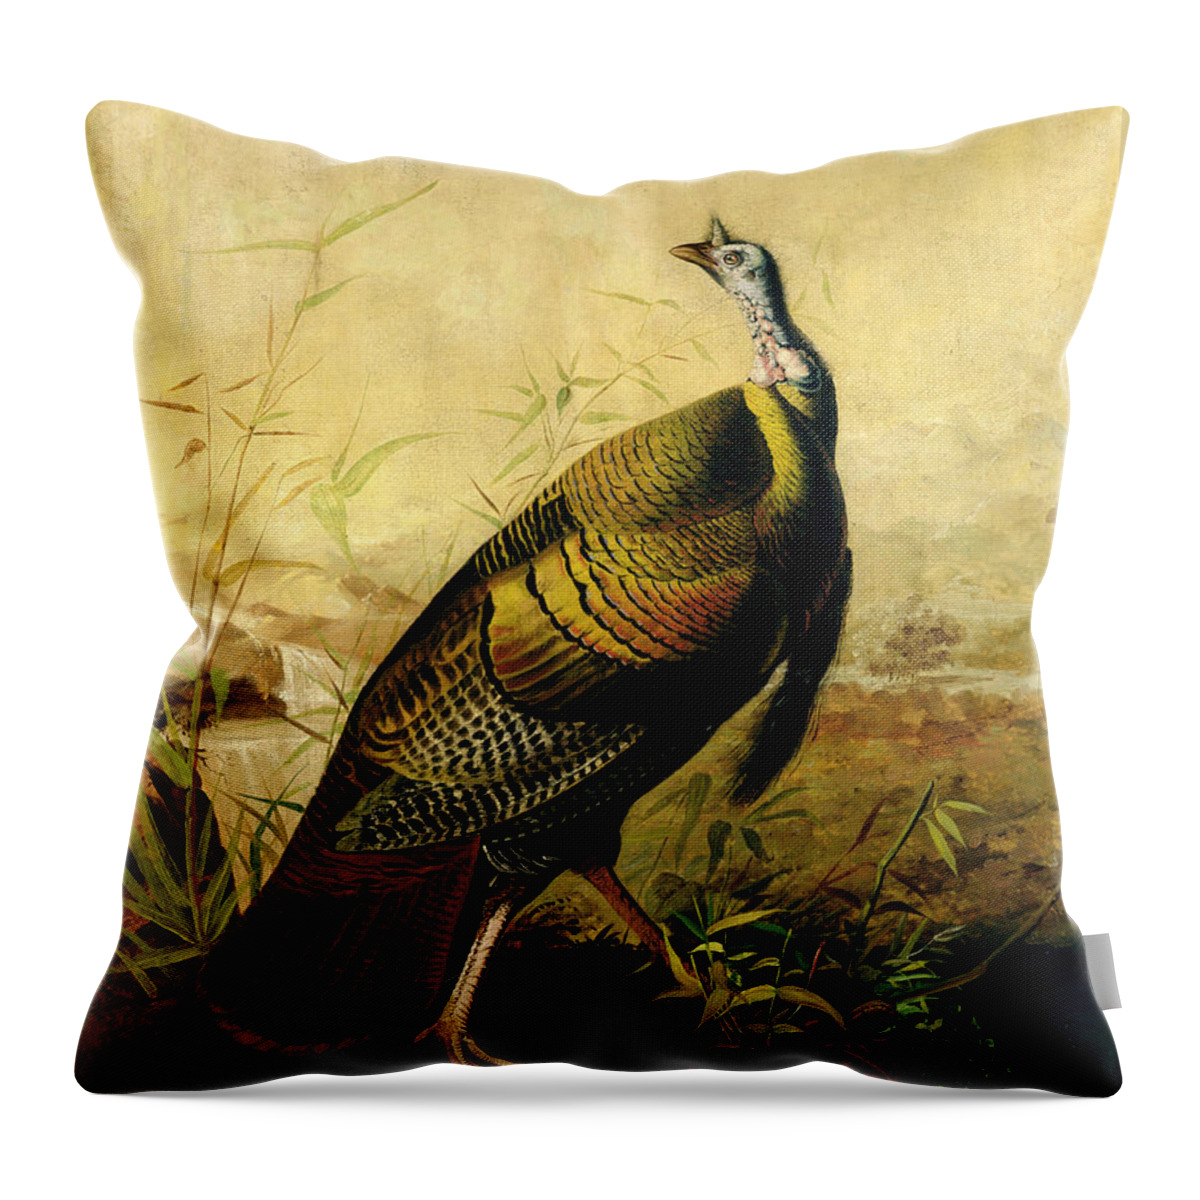 Turkey Throw Pillow featuring the painting The American Wild Turkey Cock by John James Audubon